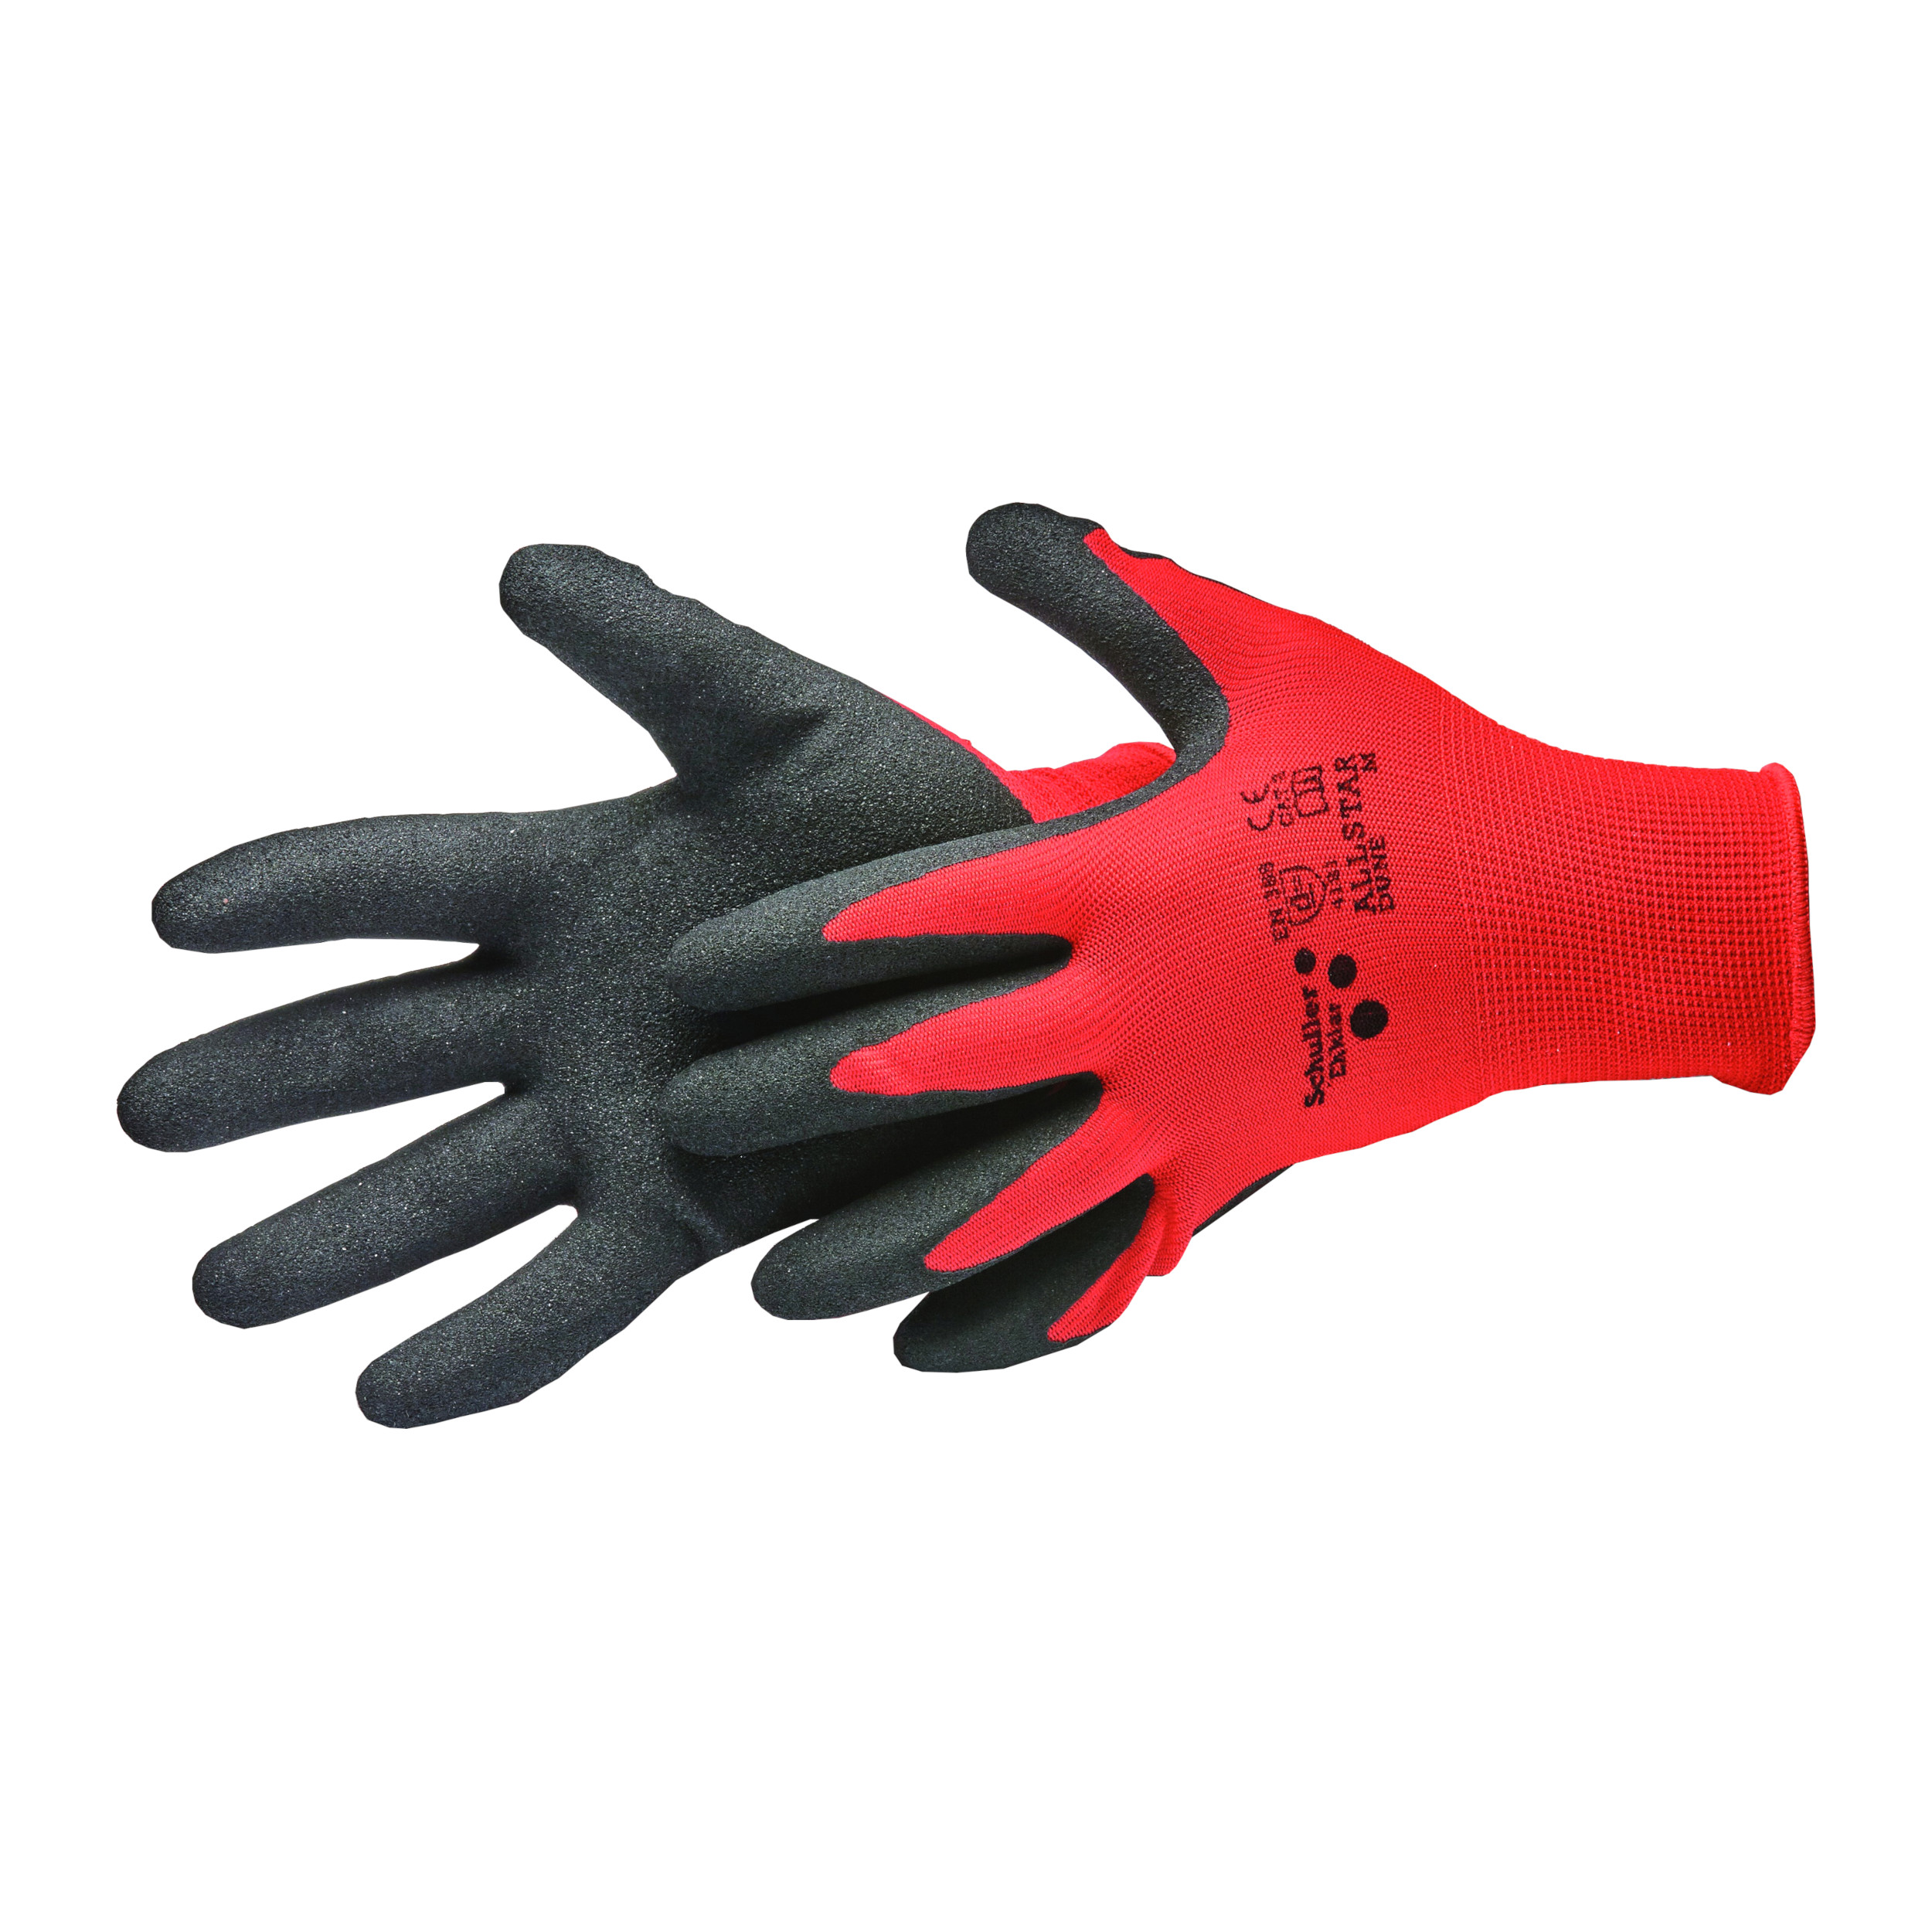 rukavice ALLSTAR, s nitrilovým potahem a úpletem, velikost 8 0.05 Kg TOP Sklad4 600118 78